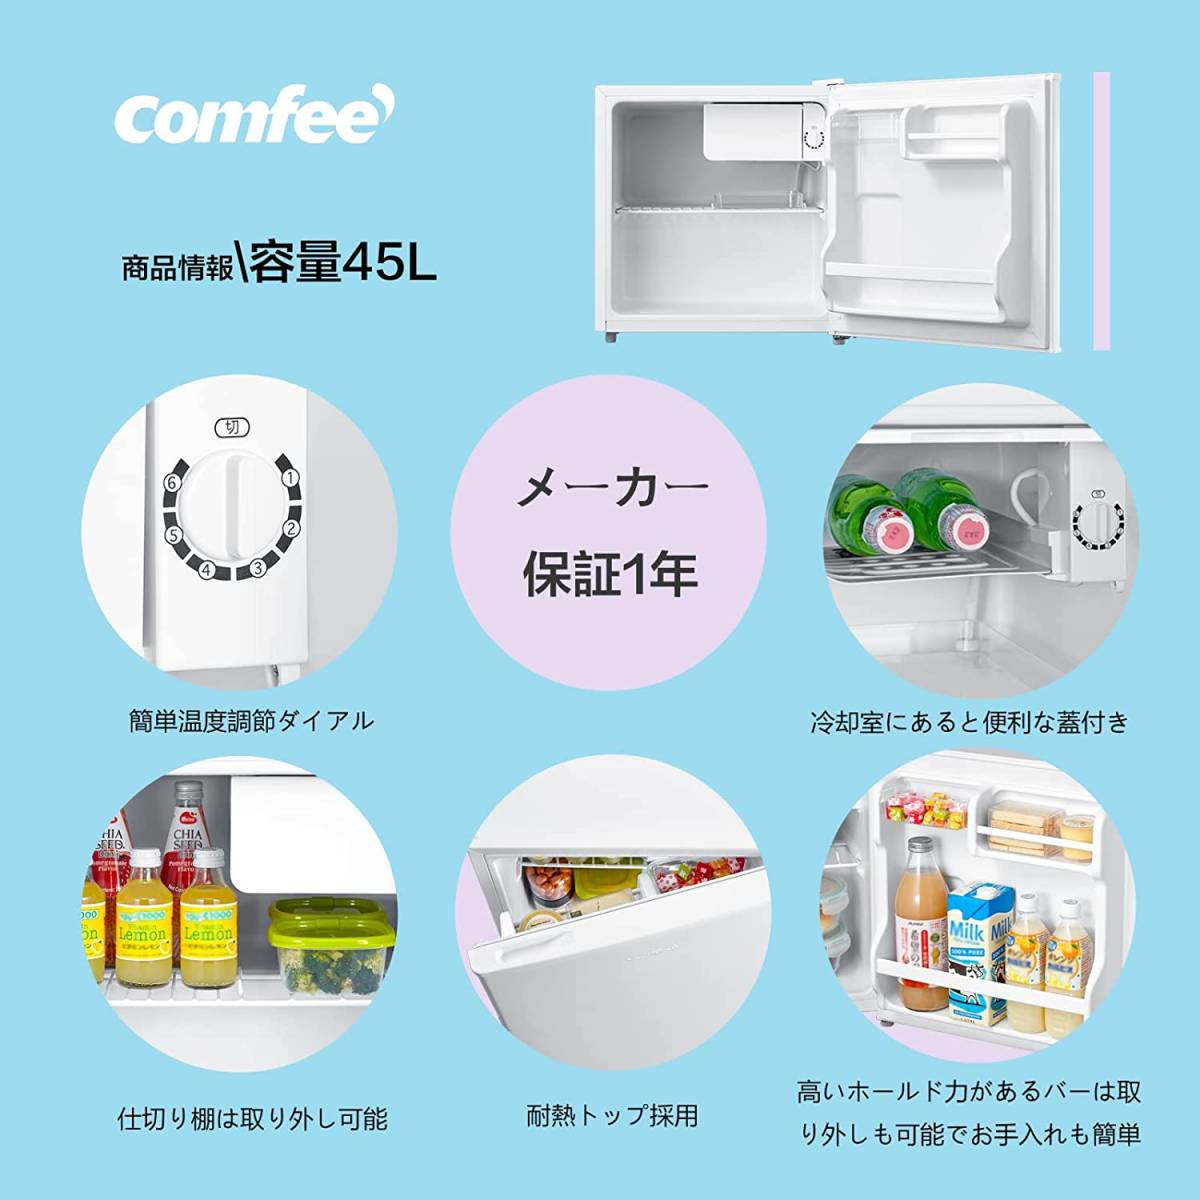 COMFEE' 冷蔵庫 小型 一人暮らし 45L 幅47cm 右開き コンパクト 静音 省エネ ミニ冷蔵庫 ホワイト RCD45WH/E_画像5